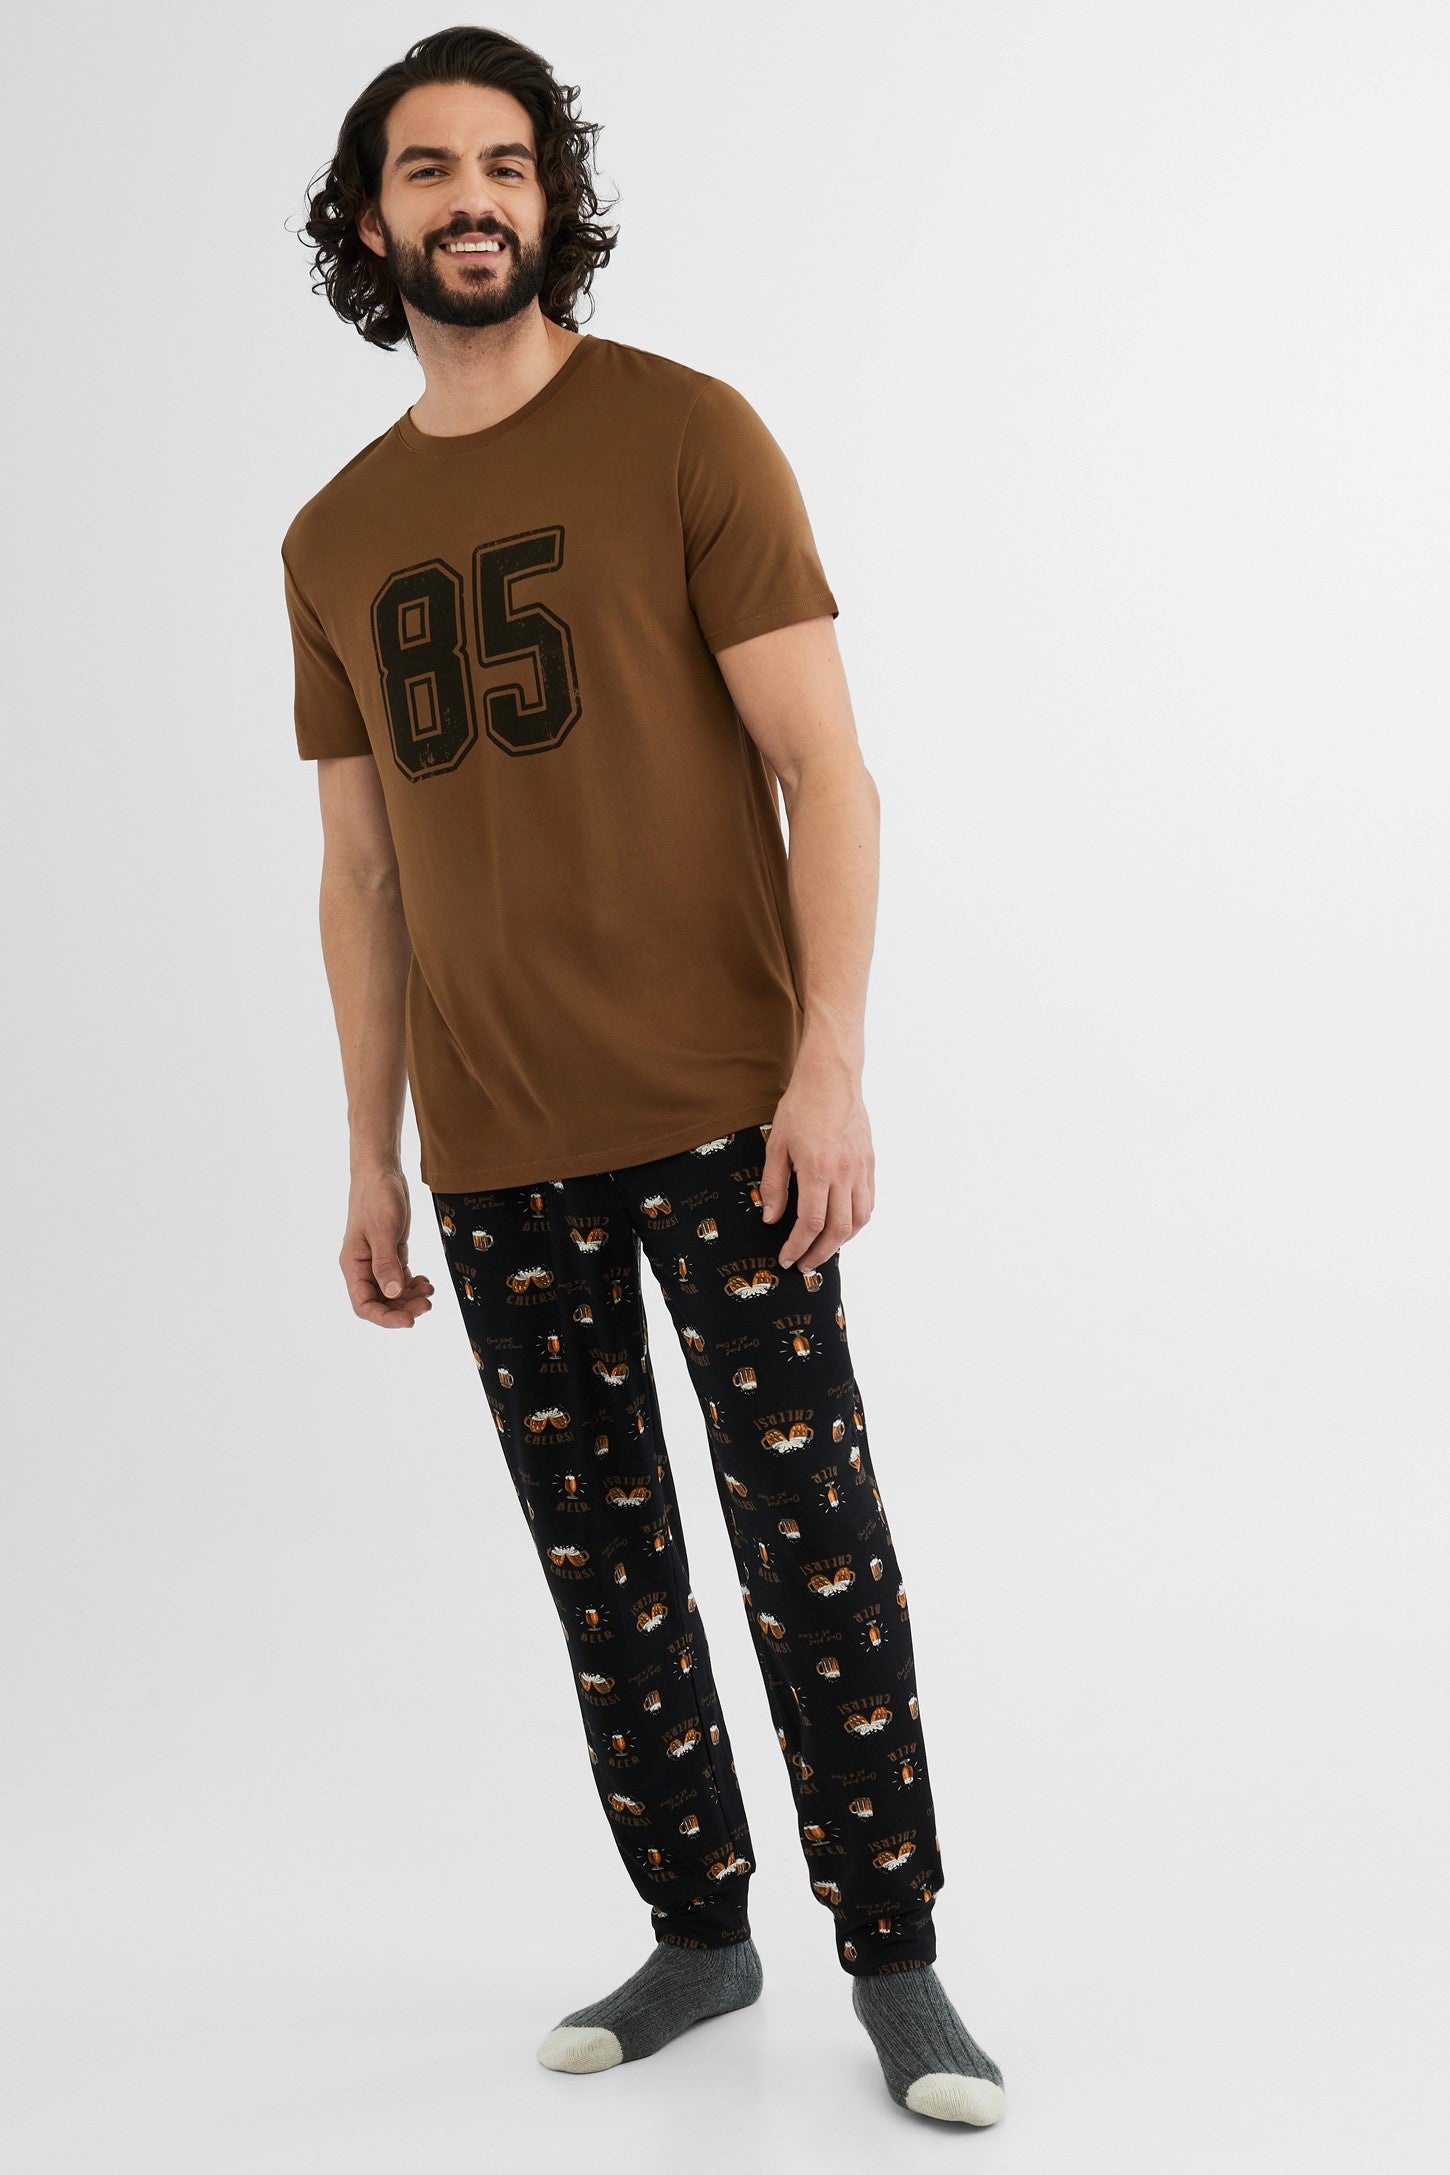 Pantalon pyjama jogger, 2/50$ - Homme && COMBO NOIR